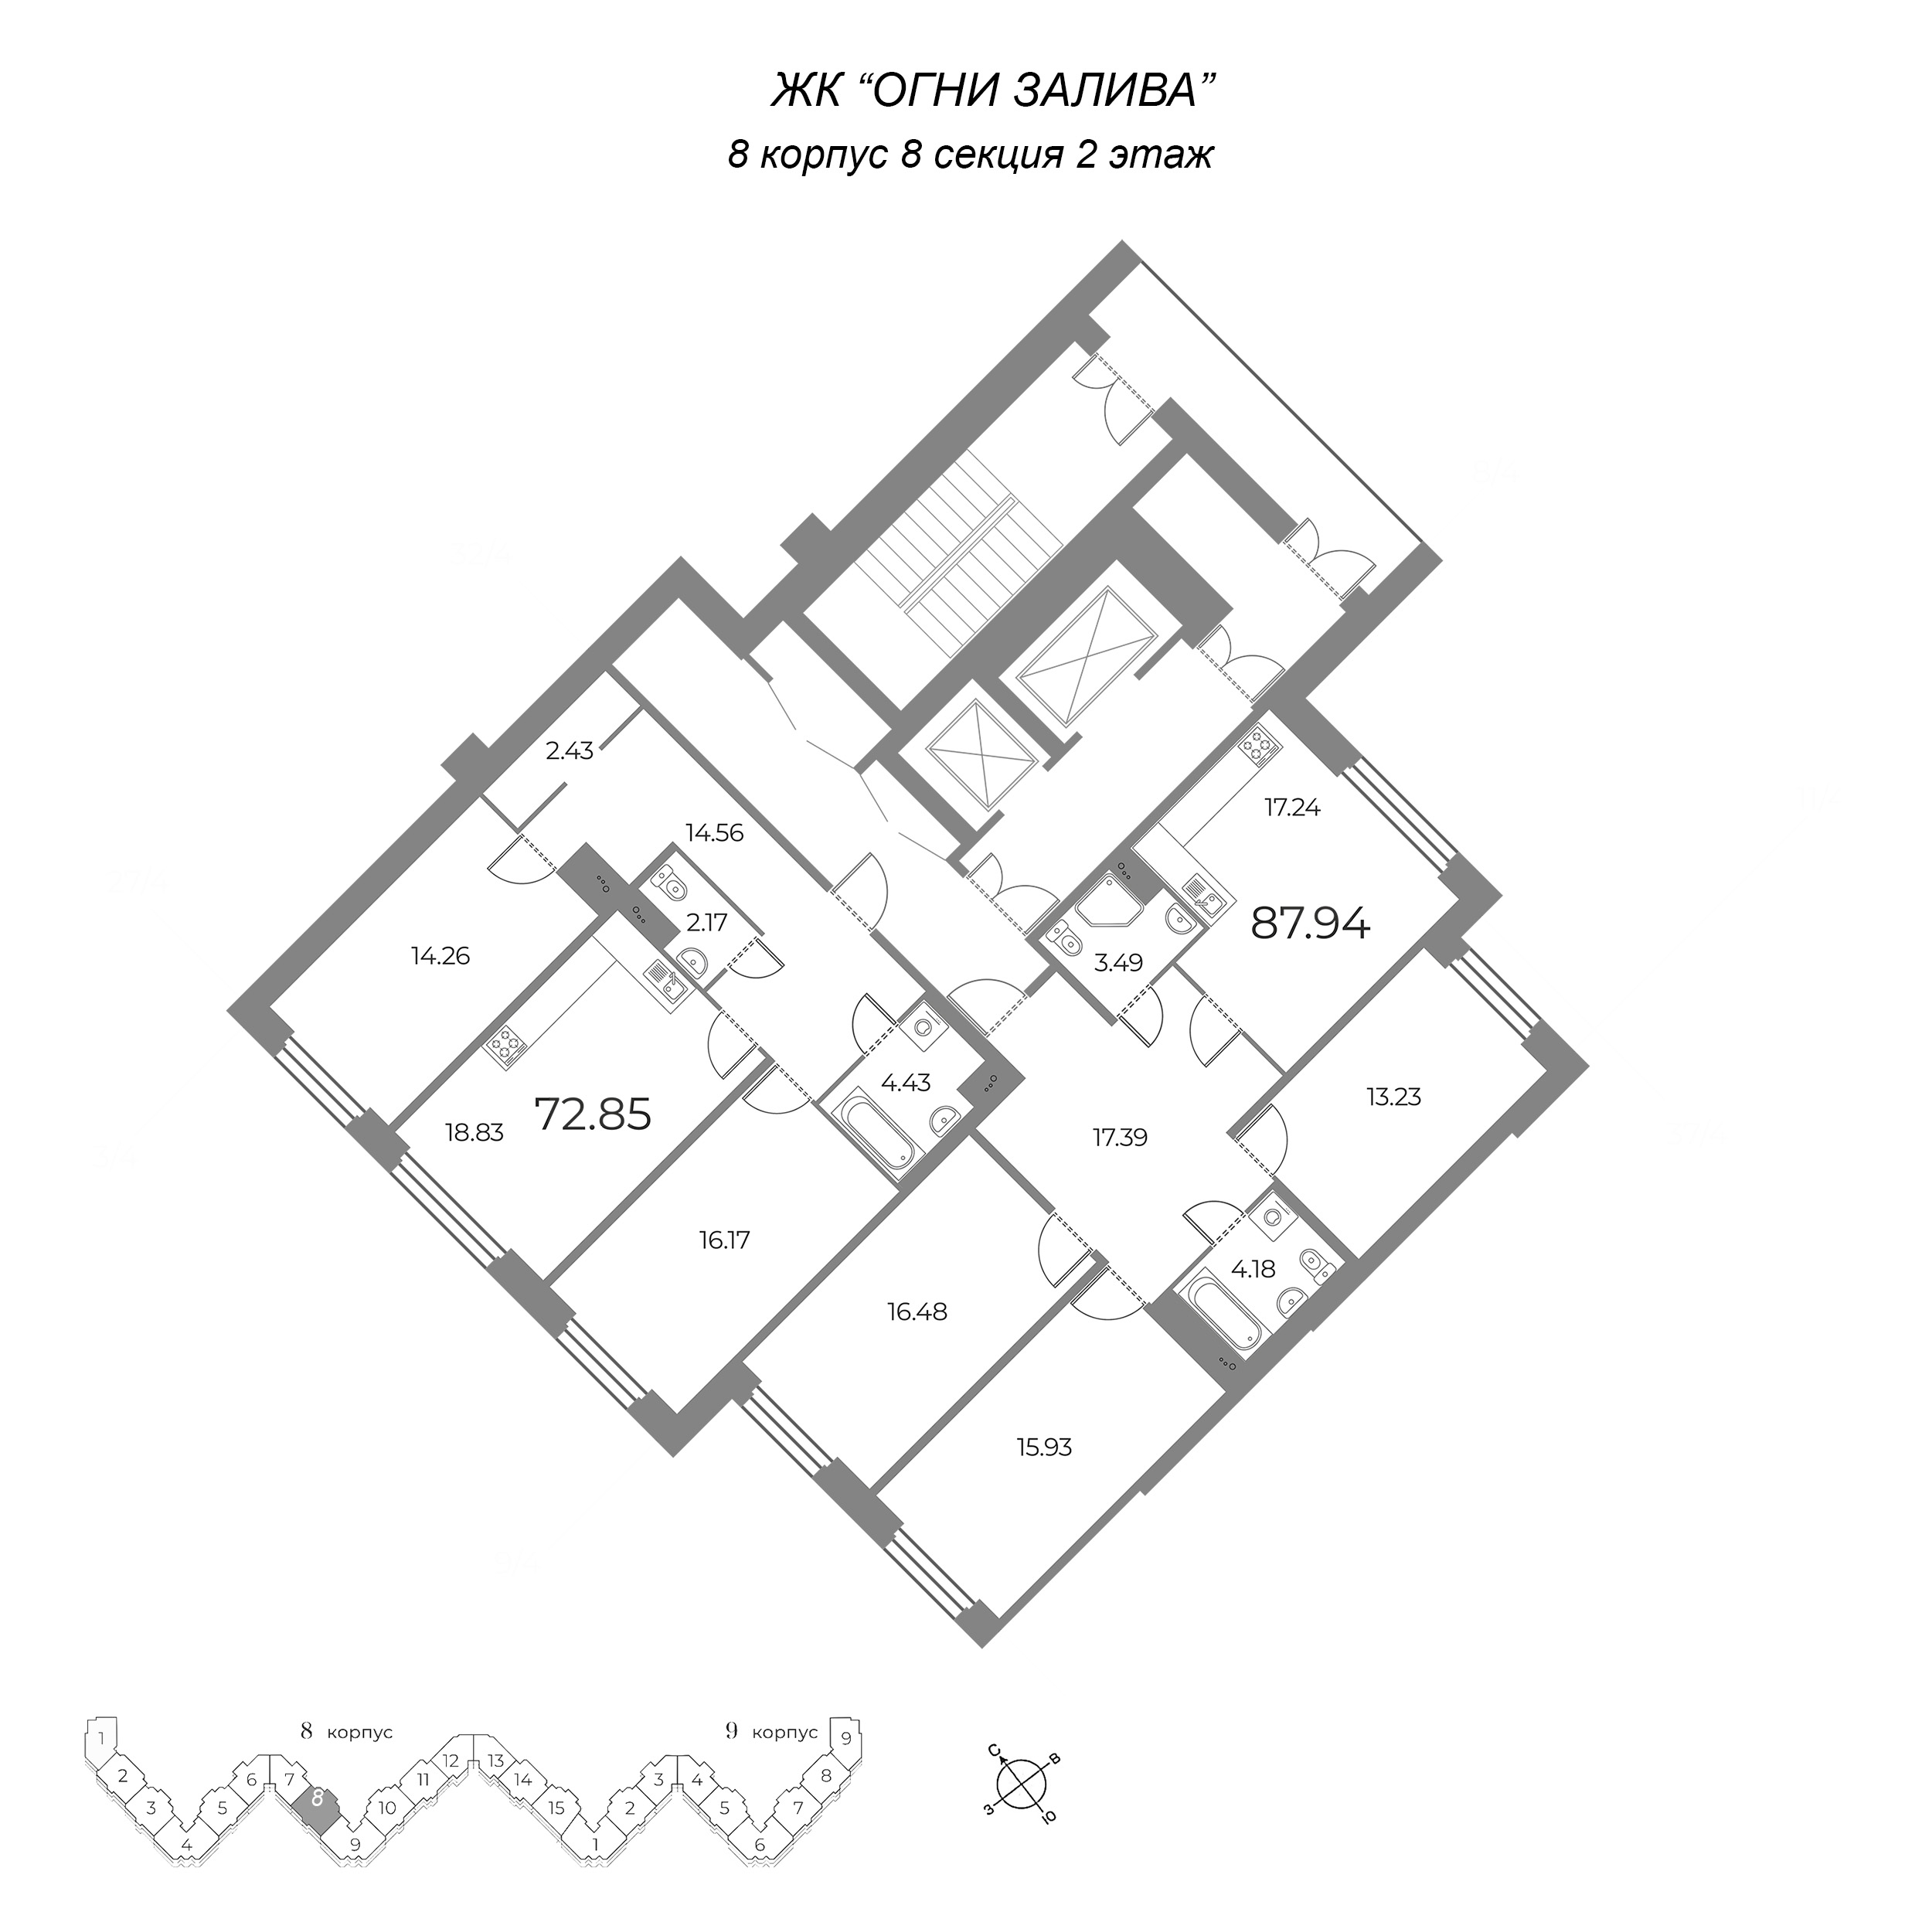 4-комнатная (Евро) квартира, 87.94 м² - планировка этажа